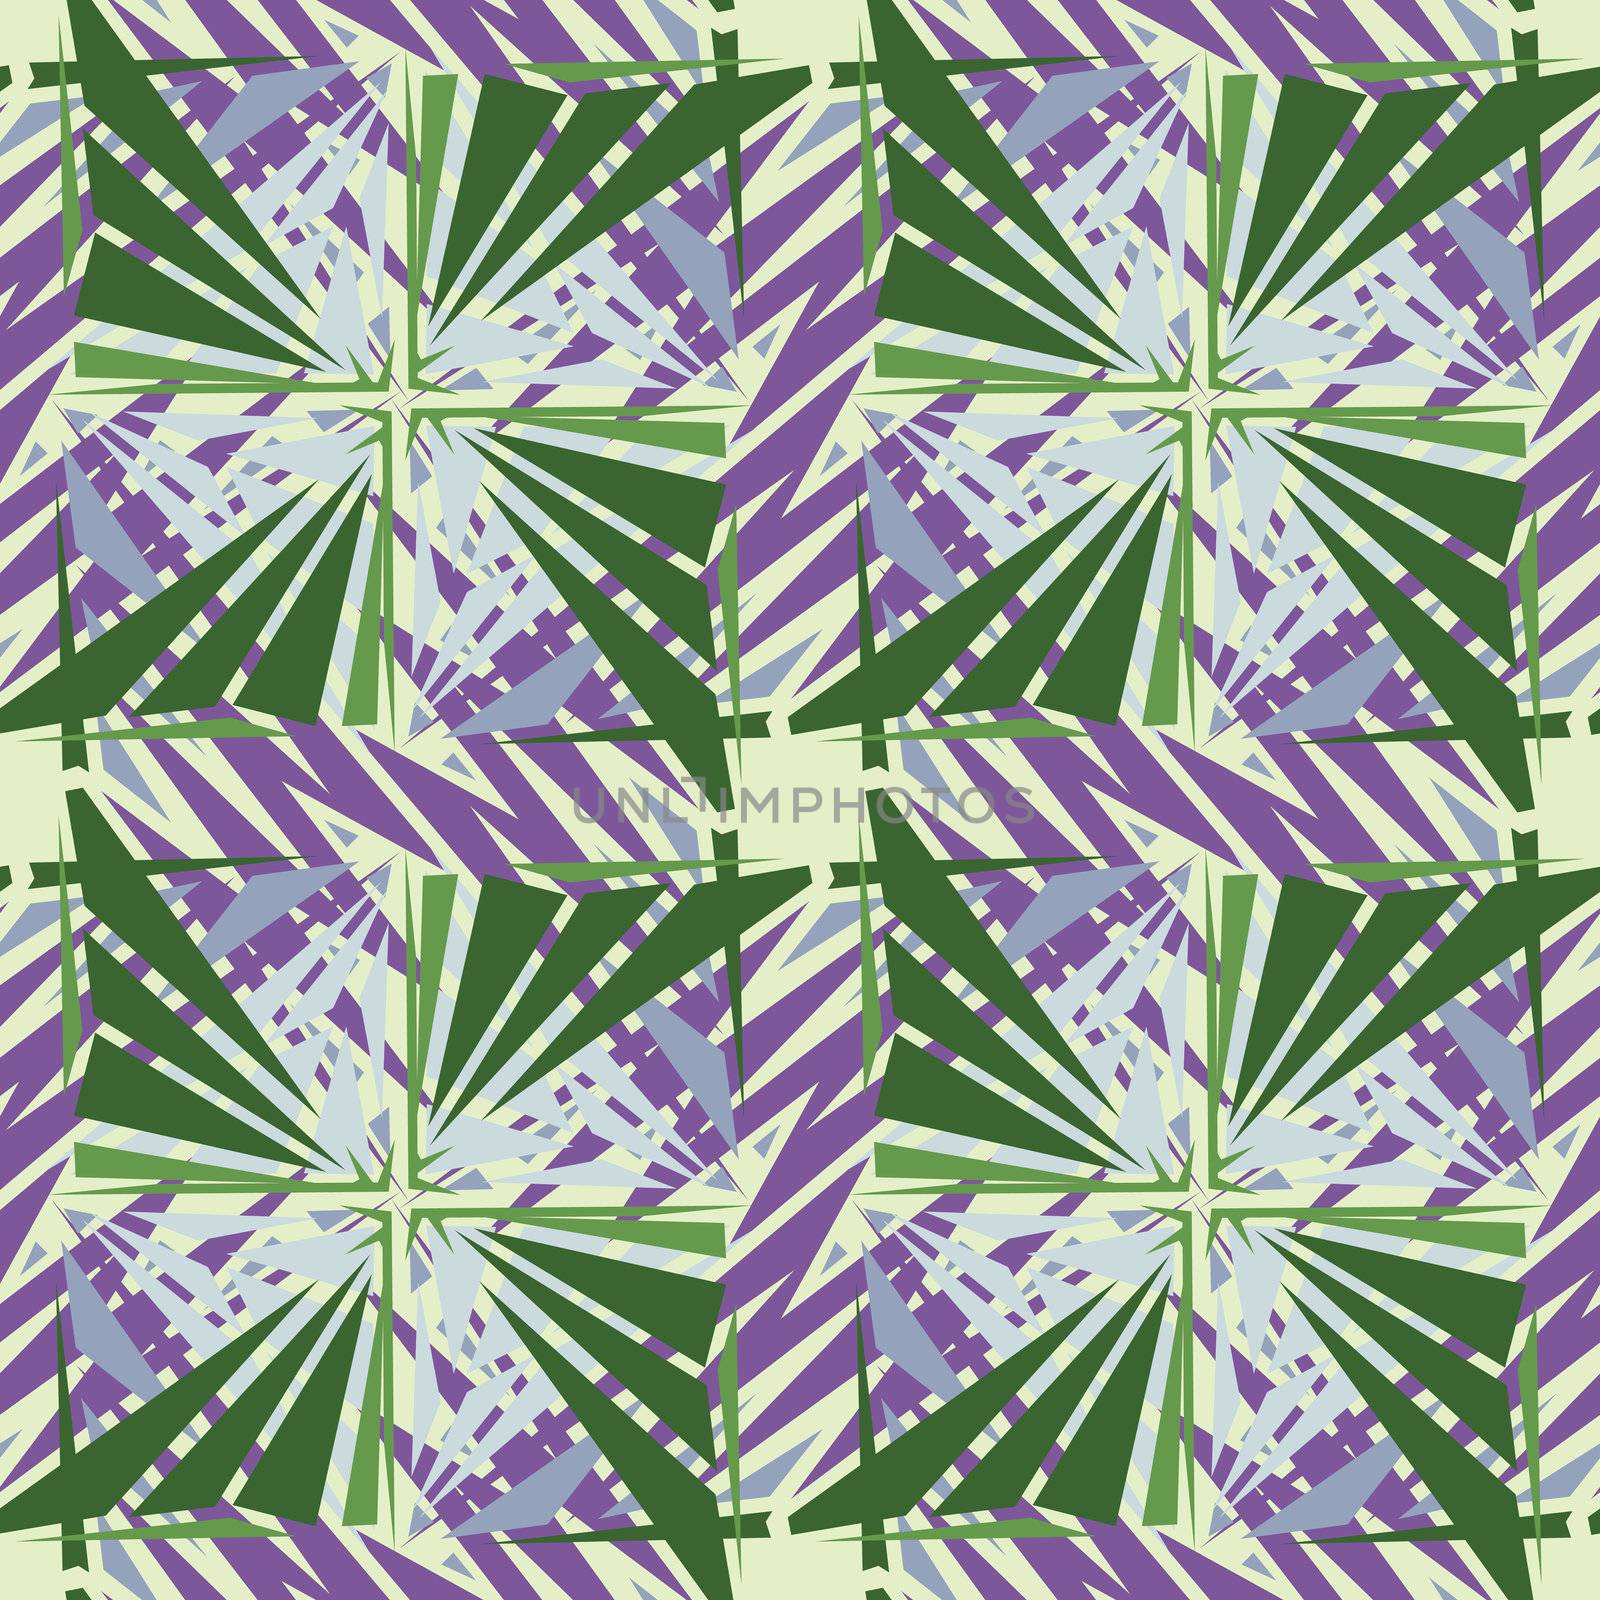 Seamless square green pinwheels in background wallpaper pattern